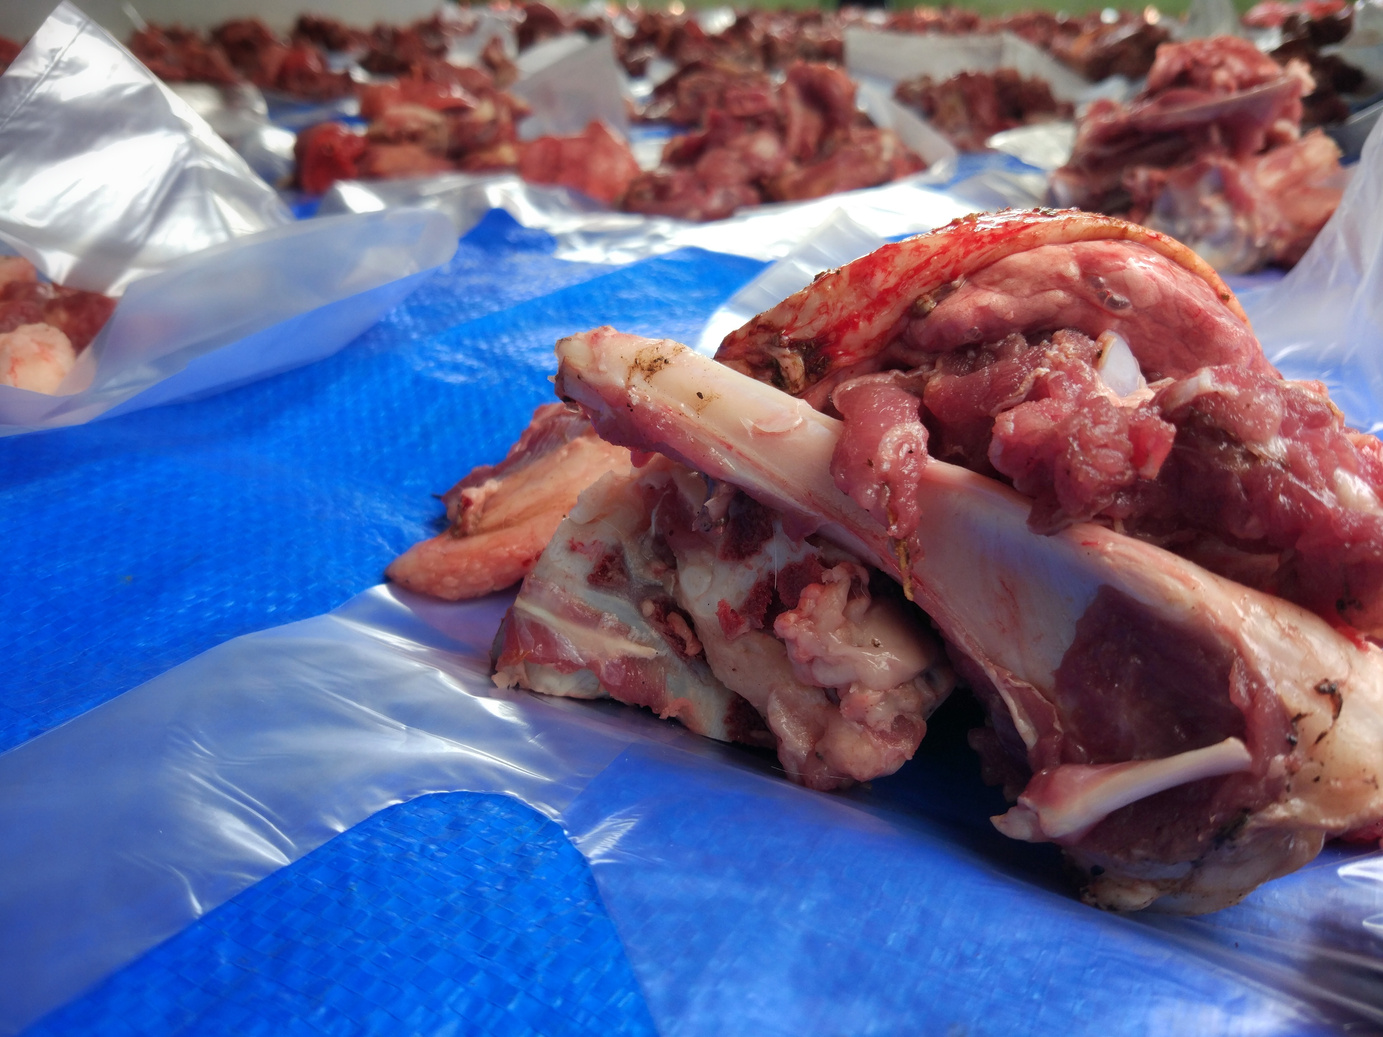 Lamb raw meat at the Feast of Qurban during Eid Al Adha